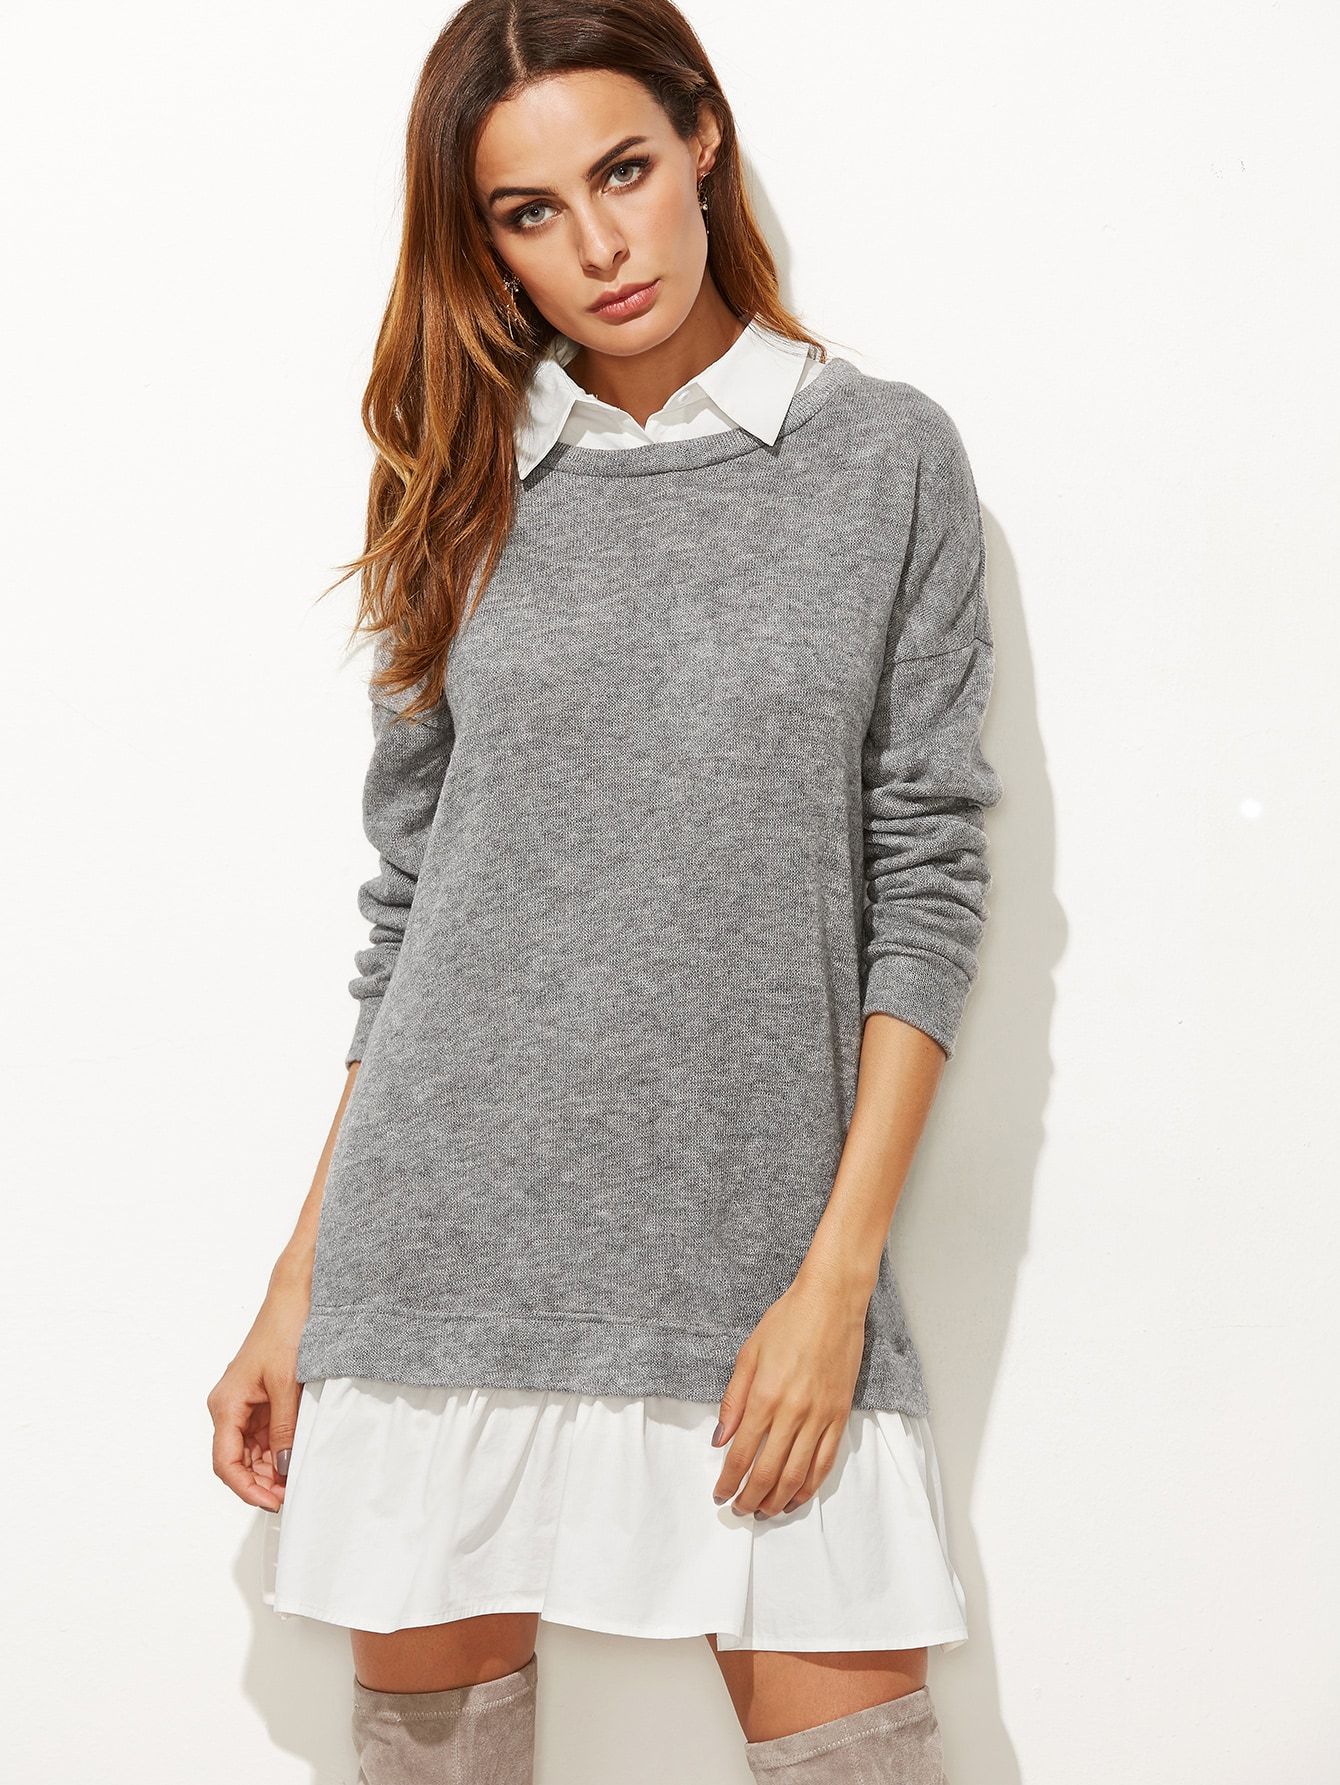 Heather Grey Contrast Collar And Hem 2 In 1 Sweatshirt Dress | ROMWE